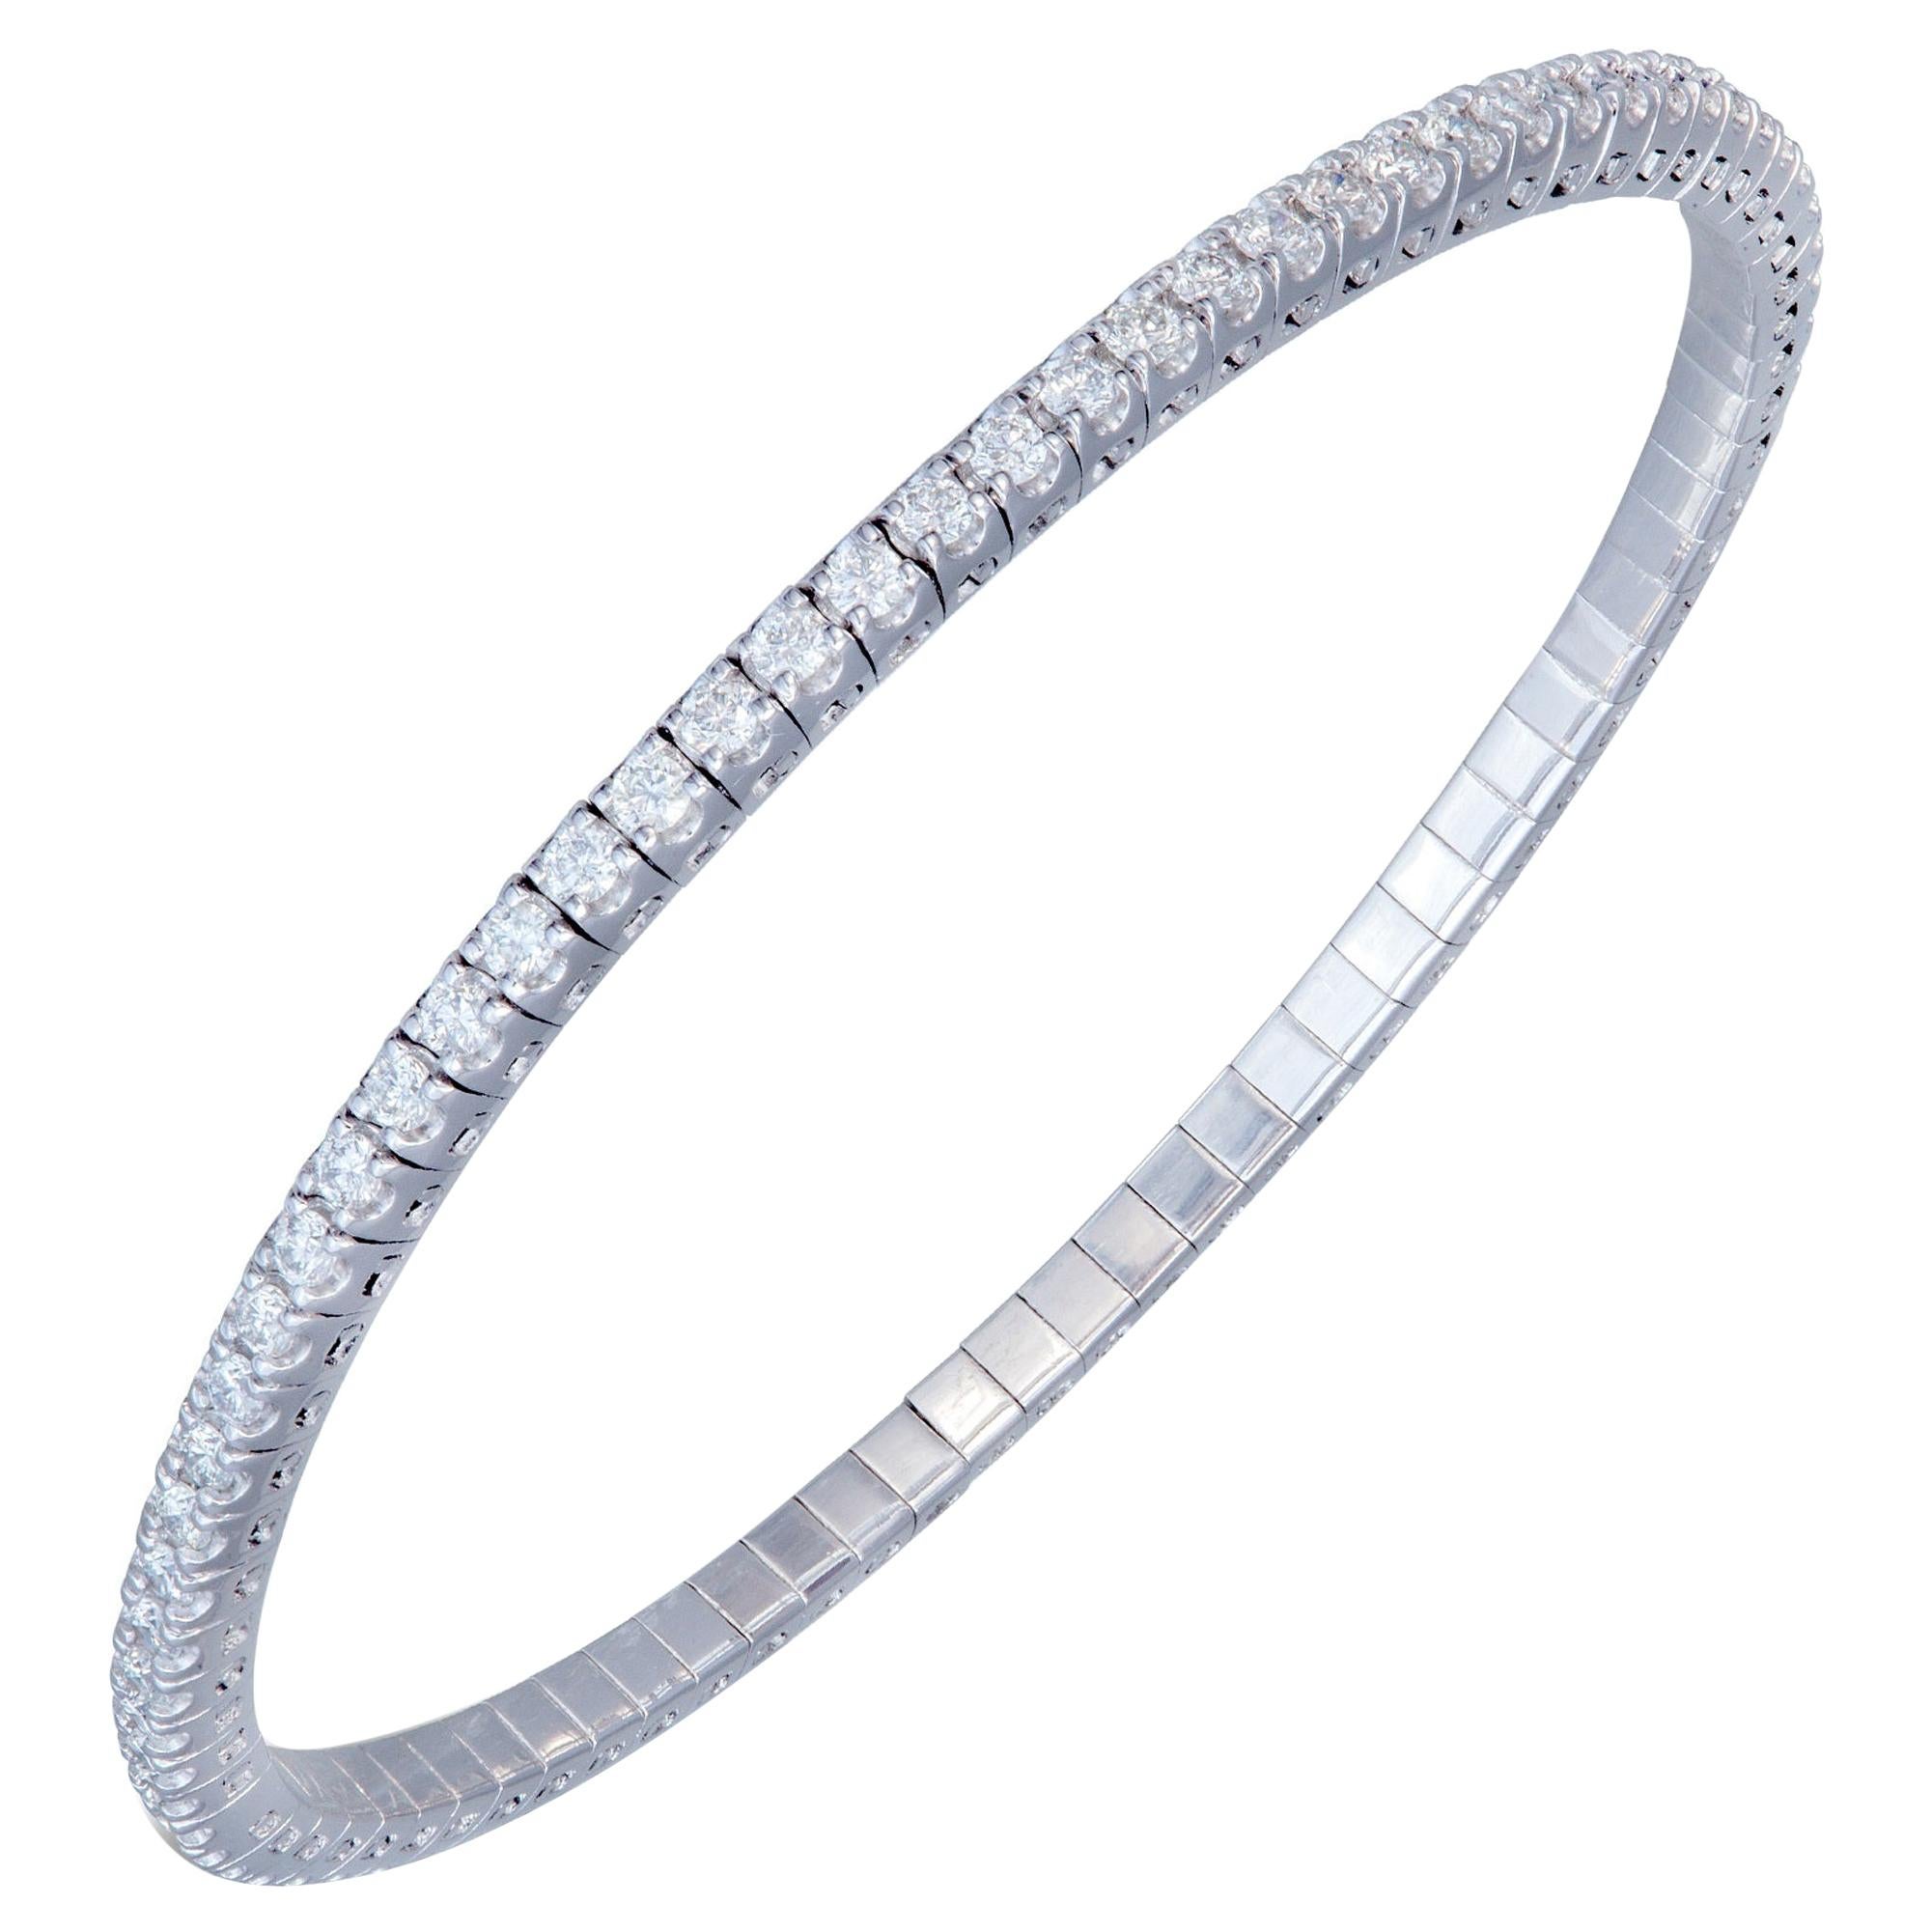 Strechable Diamond Tennis Bangle Bracelet 18k White Gold Diamond 1.69 Cts/68 Pcs